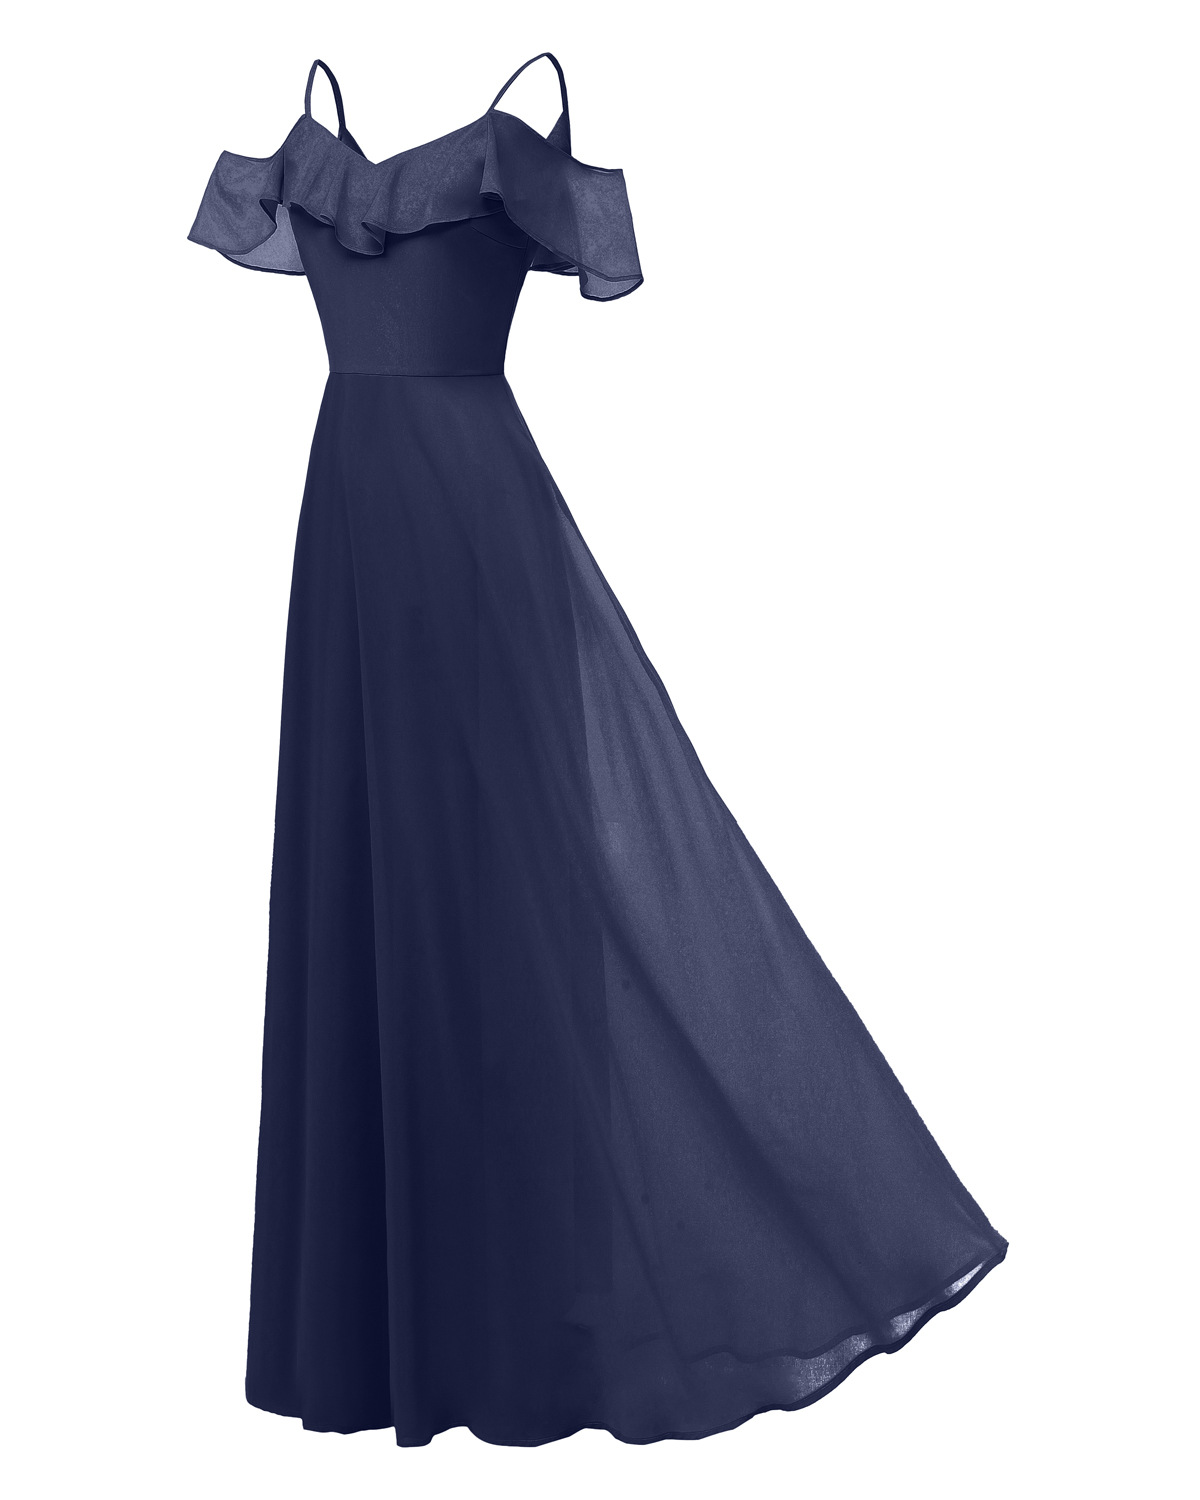 navy blue dress with ruffles